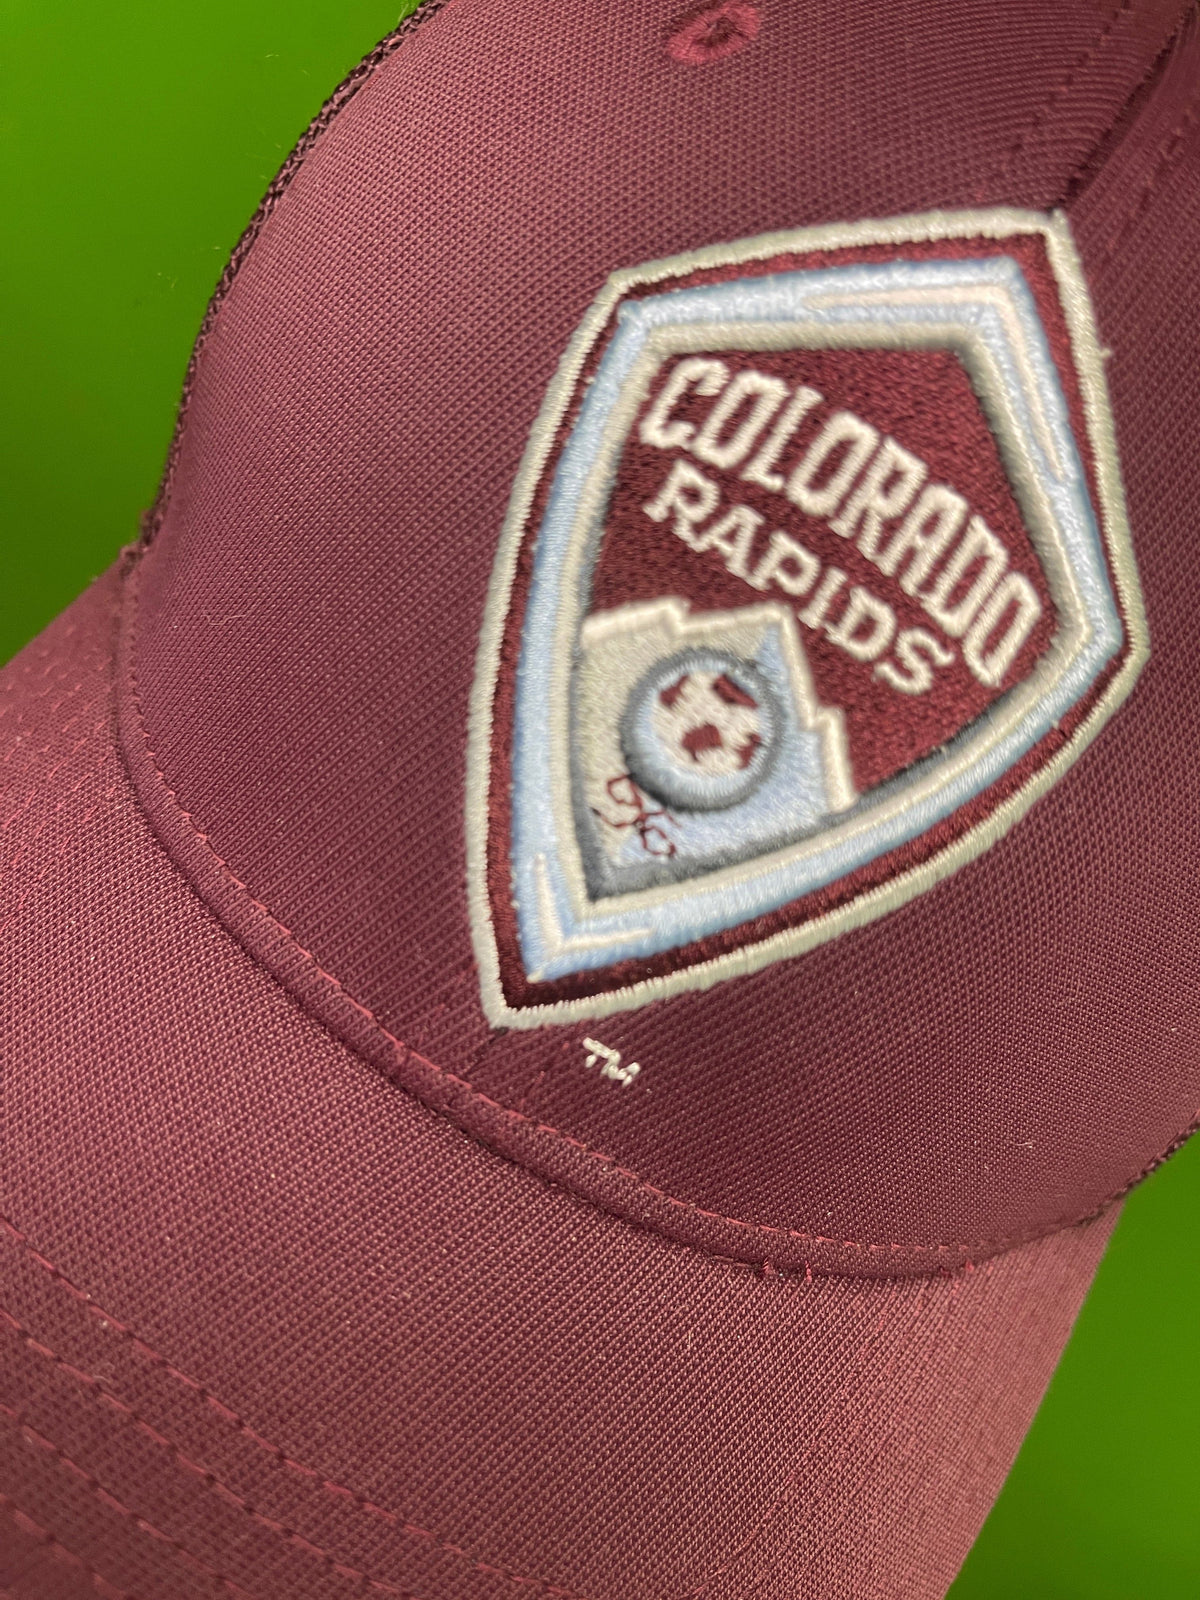 MLS Colorado Rapids Adidas Mesh Warm-Weather Cap/Hat Small/Medium